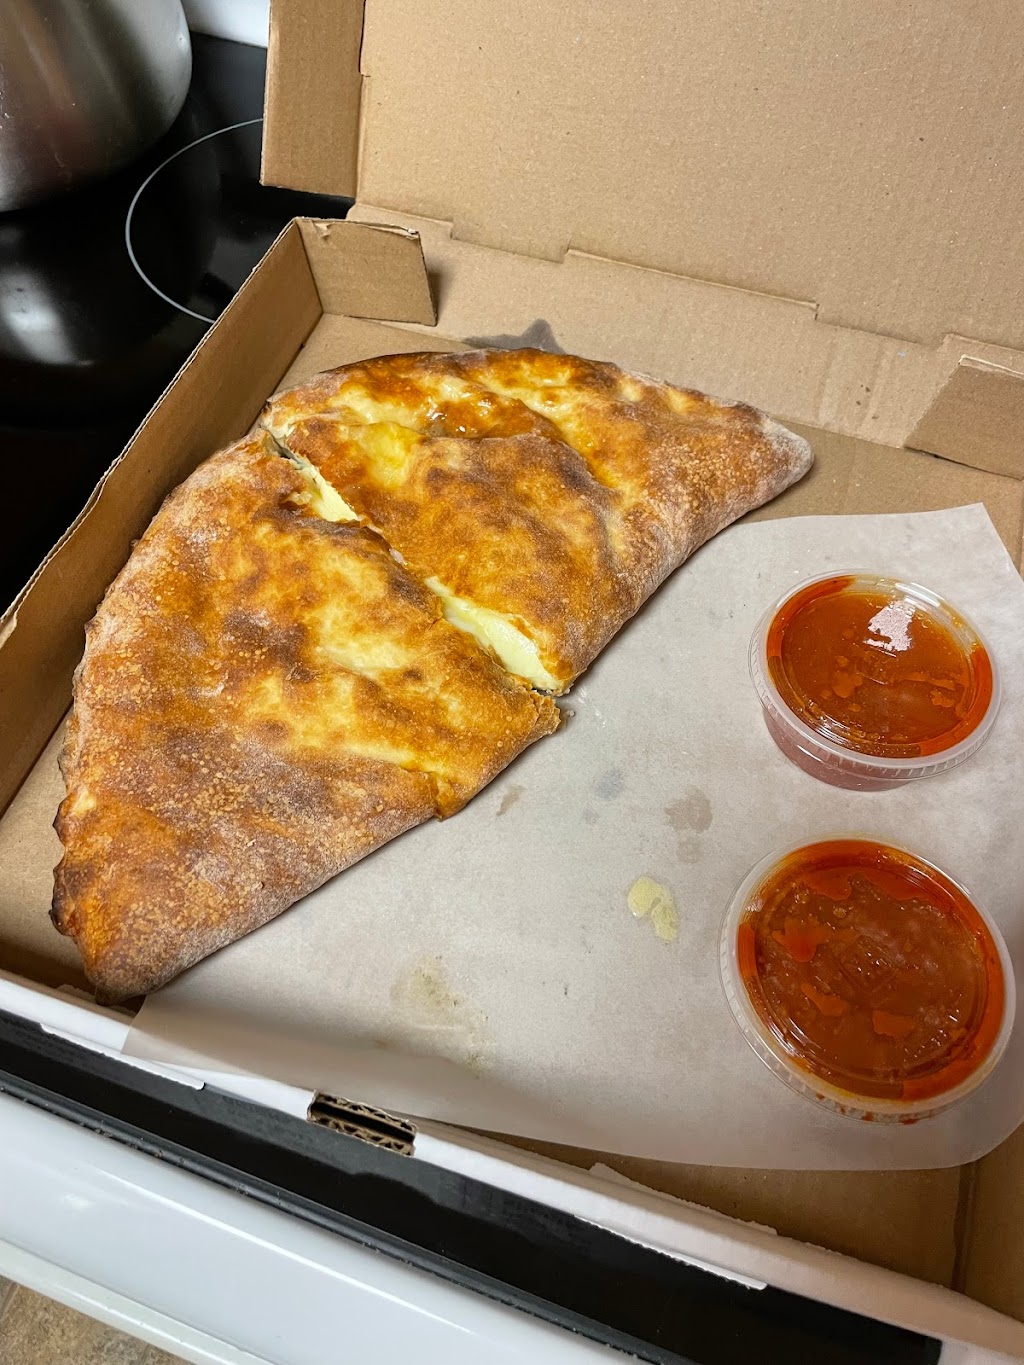 Pizzaros Pizzeria | 225 West St, Seymour, CT 06483 | Phone: (203) 881-9551